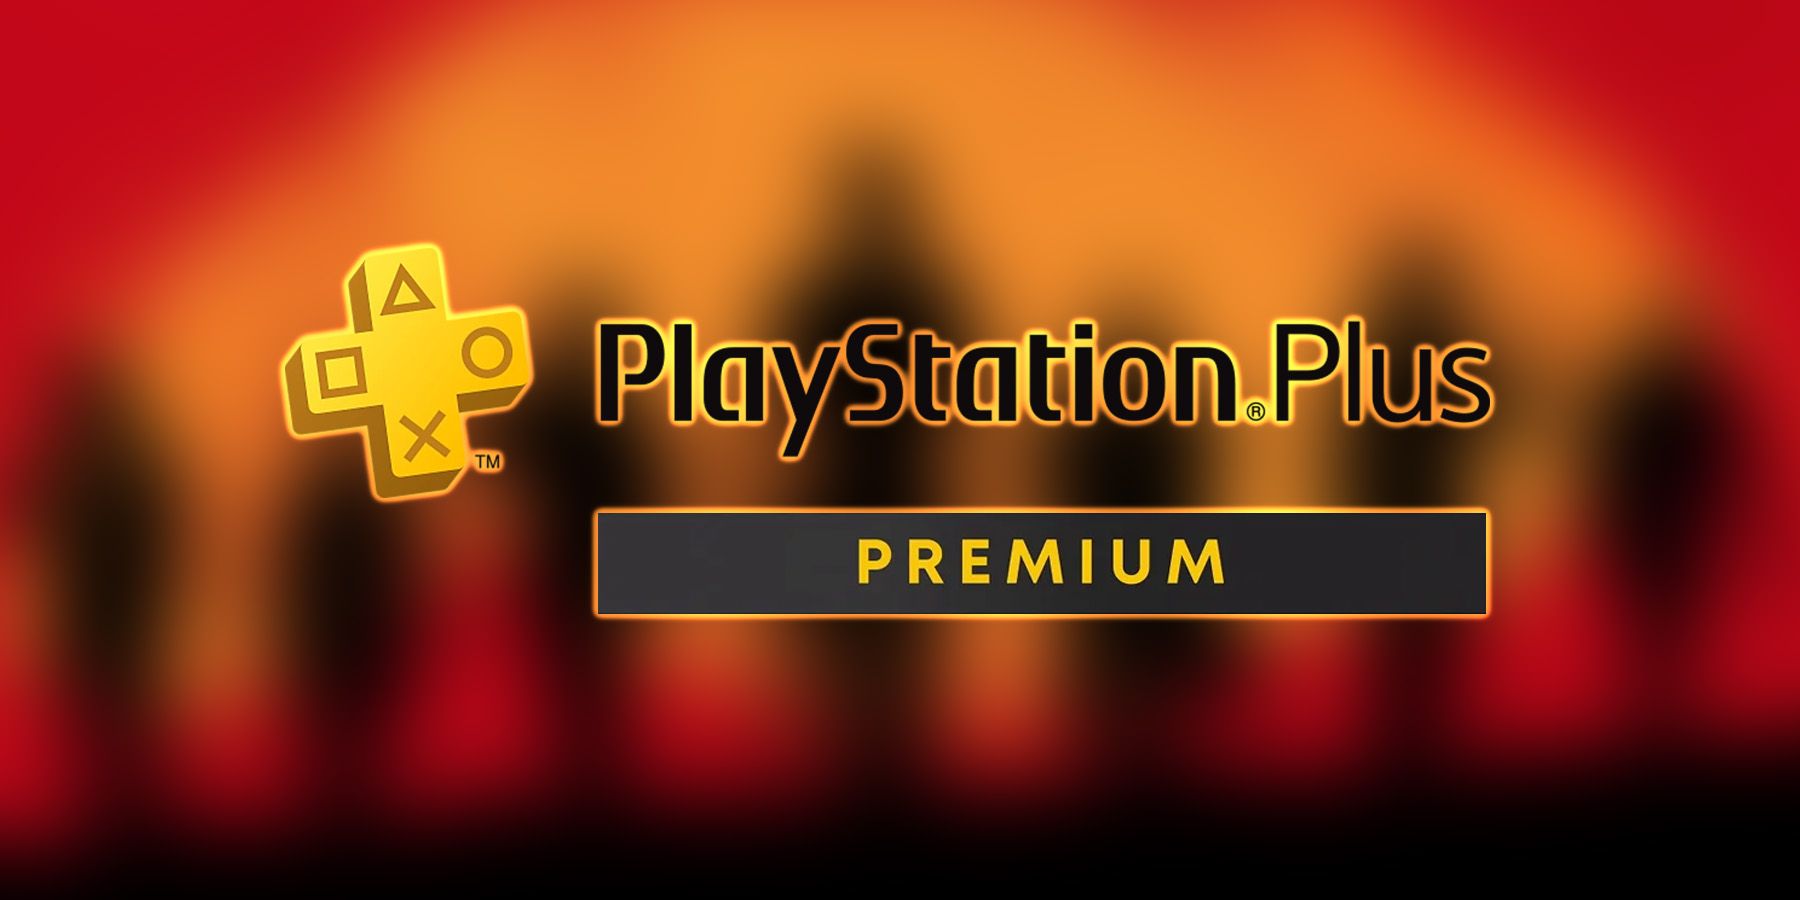 Playstation 2 Plus Premium RD 2